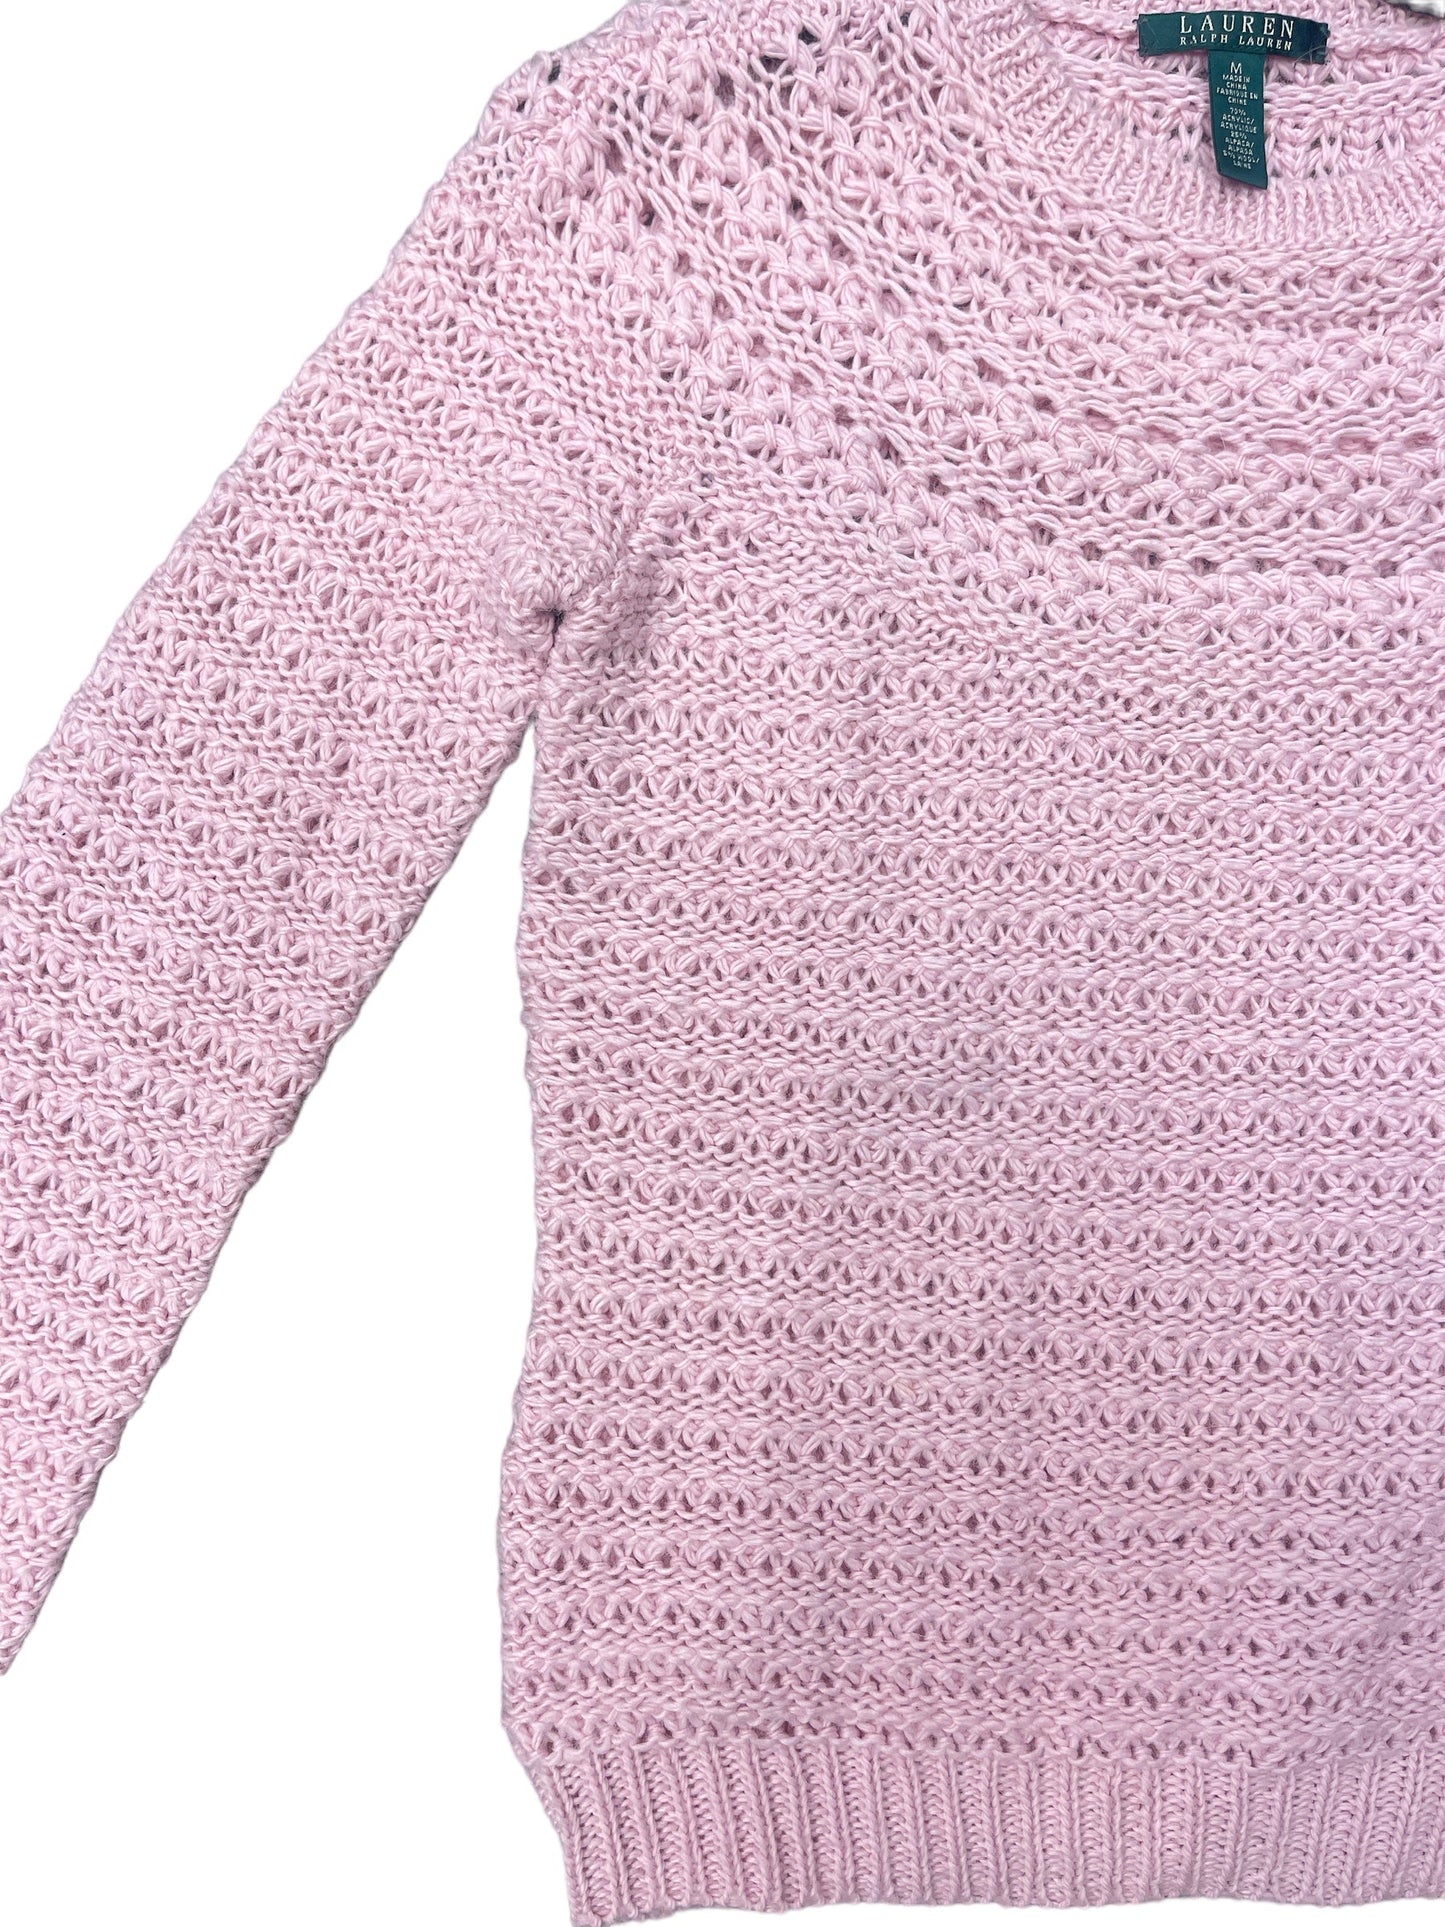 Sweater By Lauren By Ralph Lauren  Size: M